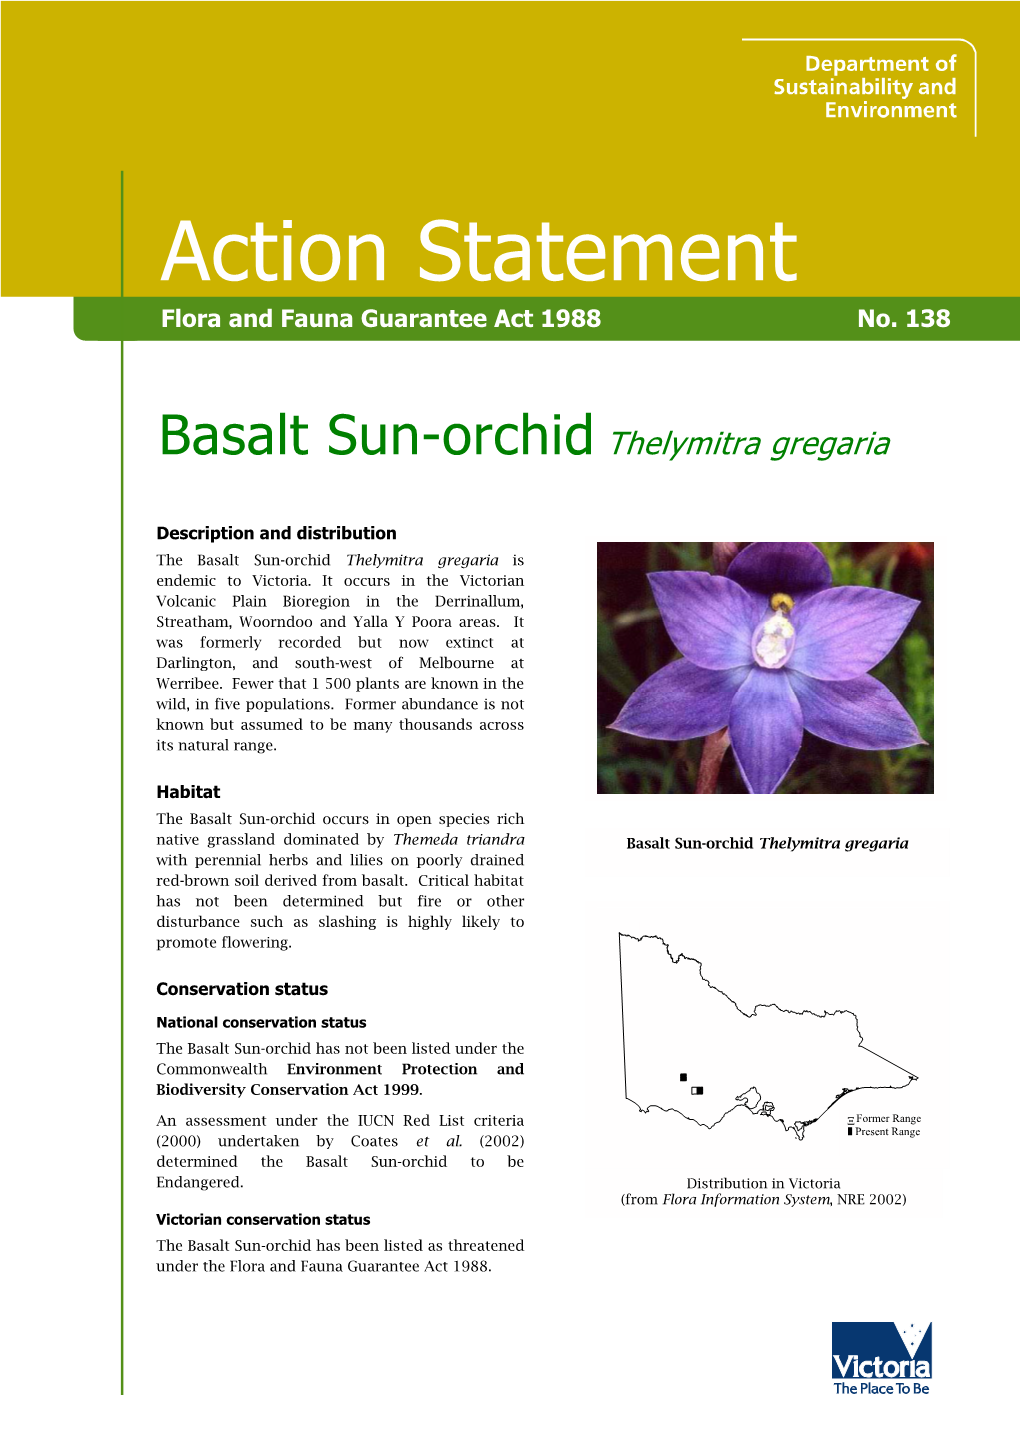 Basalt Sun-Orchid (Thelymitra Gregaria)